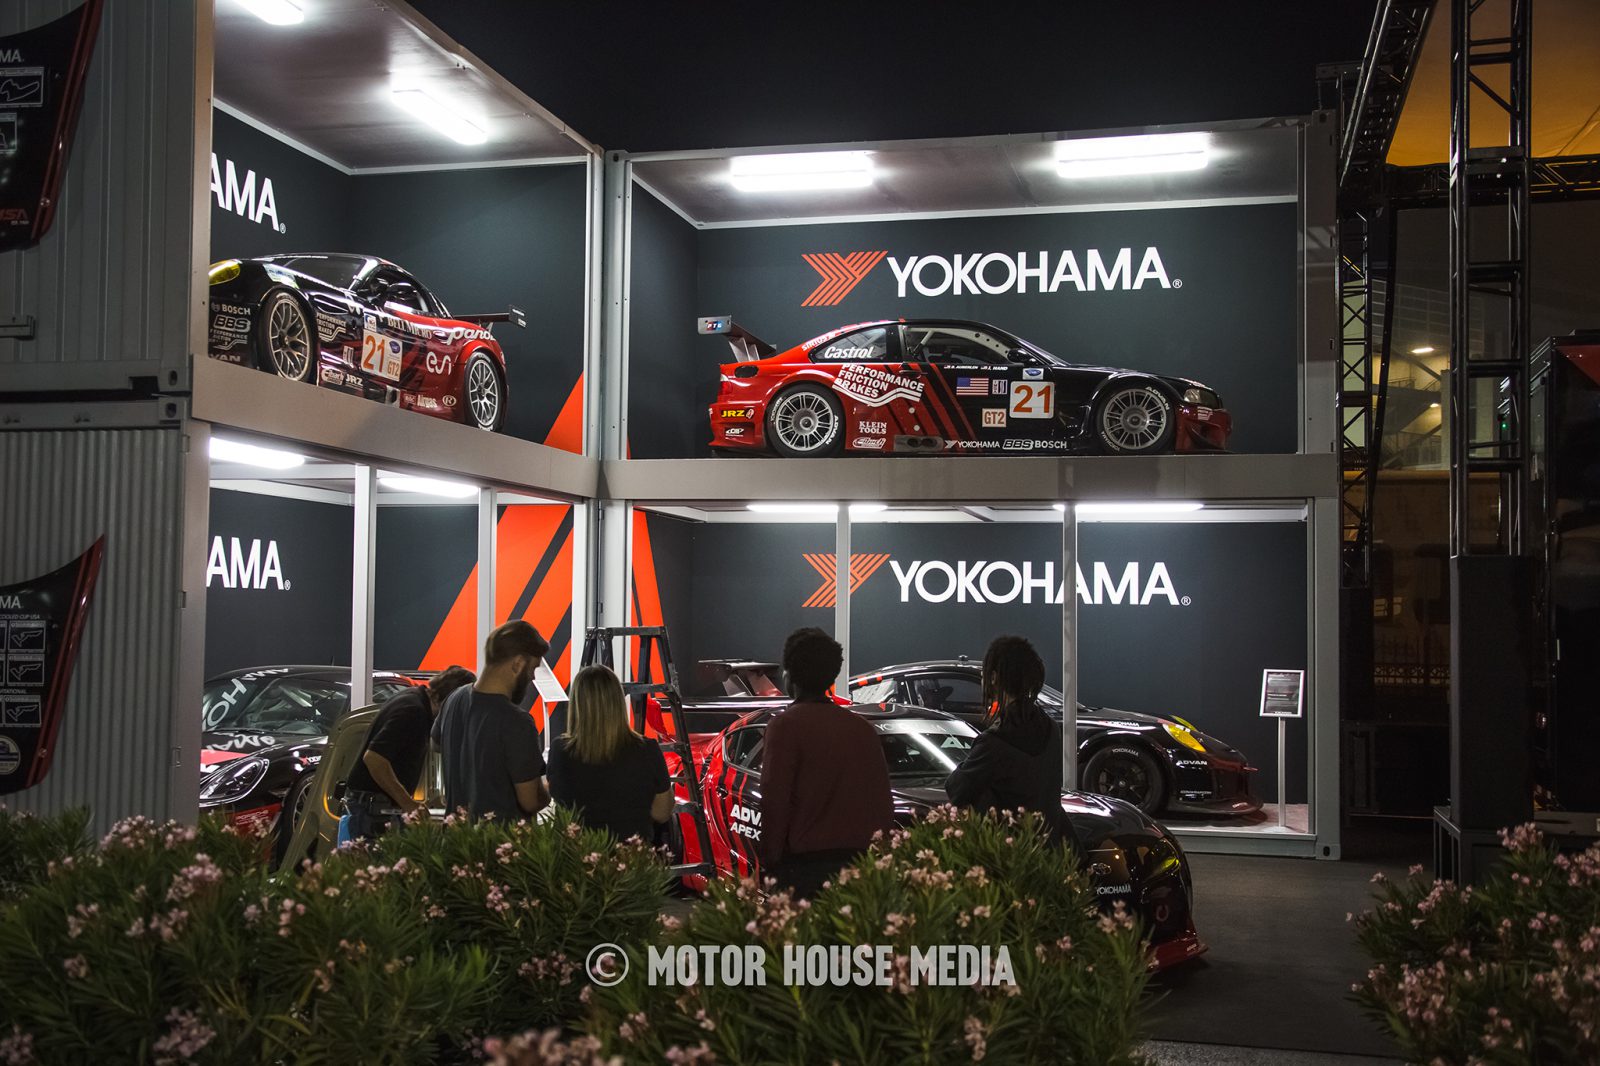 Yokohama display at the Sema show